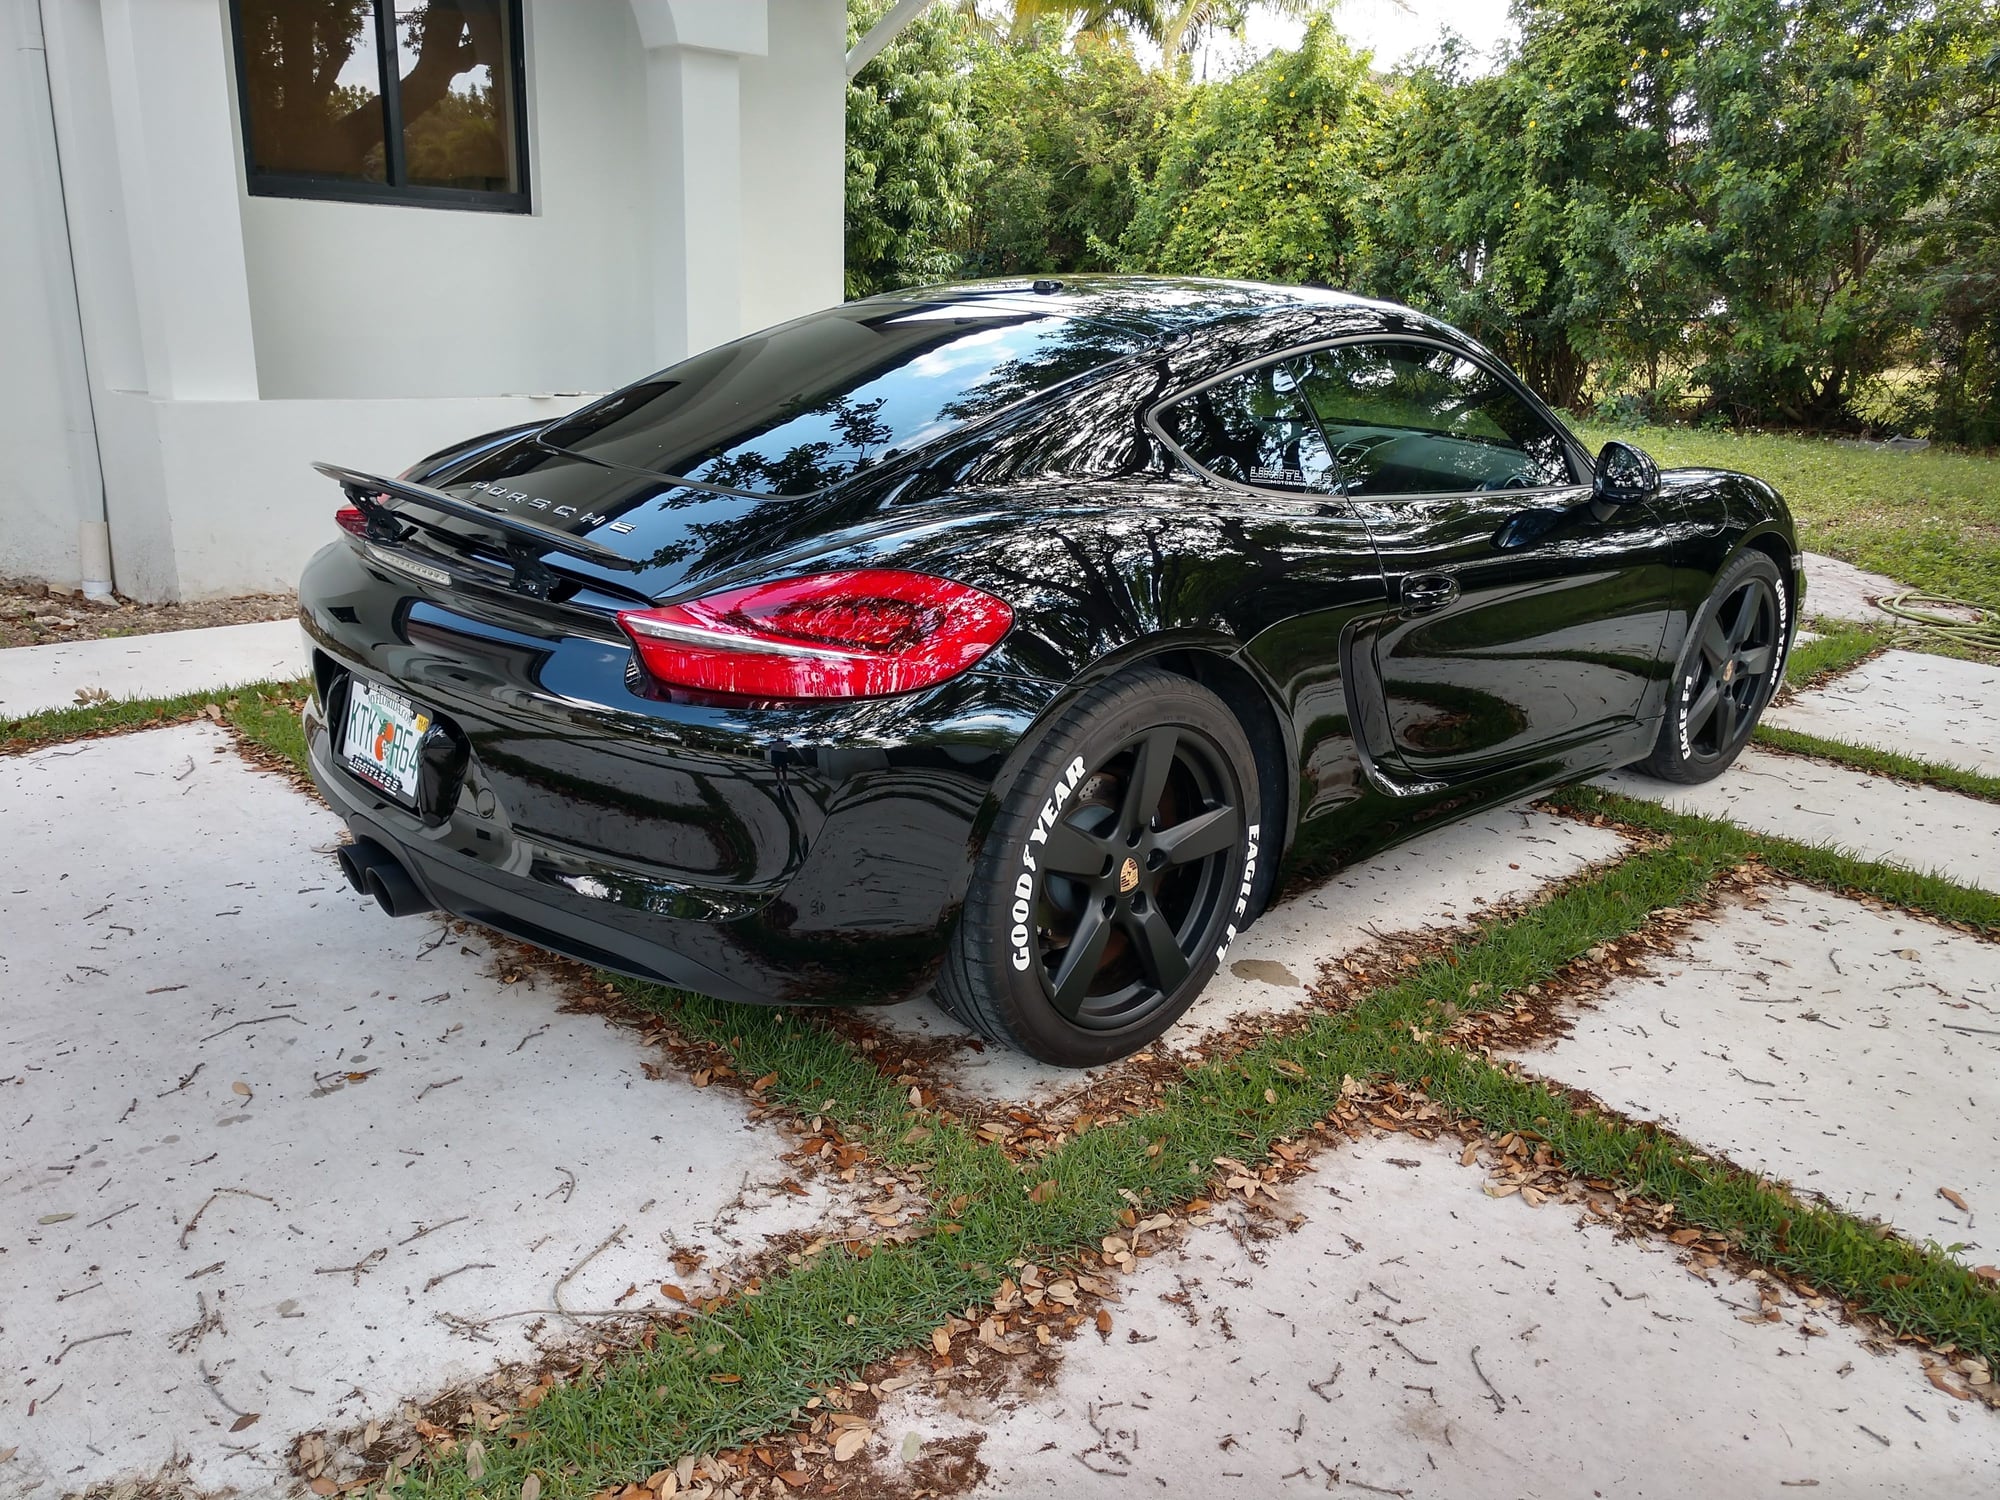 2014 Porsche Cayman - 2014 Black Porsche Cayman Base 19350 mls - Used - VIN WP0AA2A86EK173714 - 19,350 Miles - 6 cyl - 2WD - Manual - Coupe - Black - Miami, FL 33173, United States